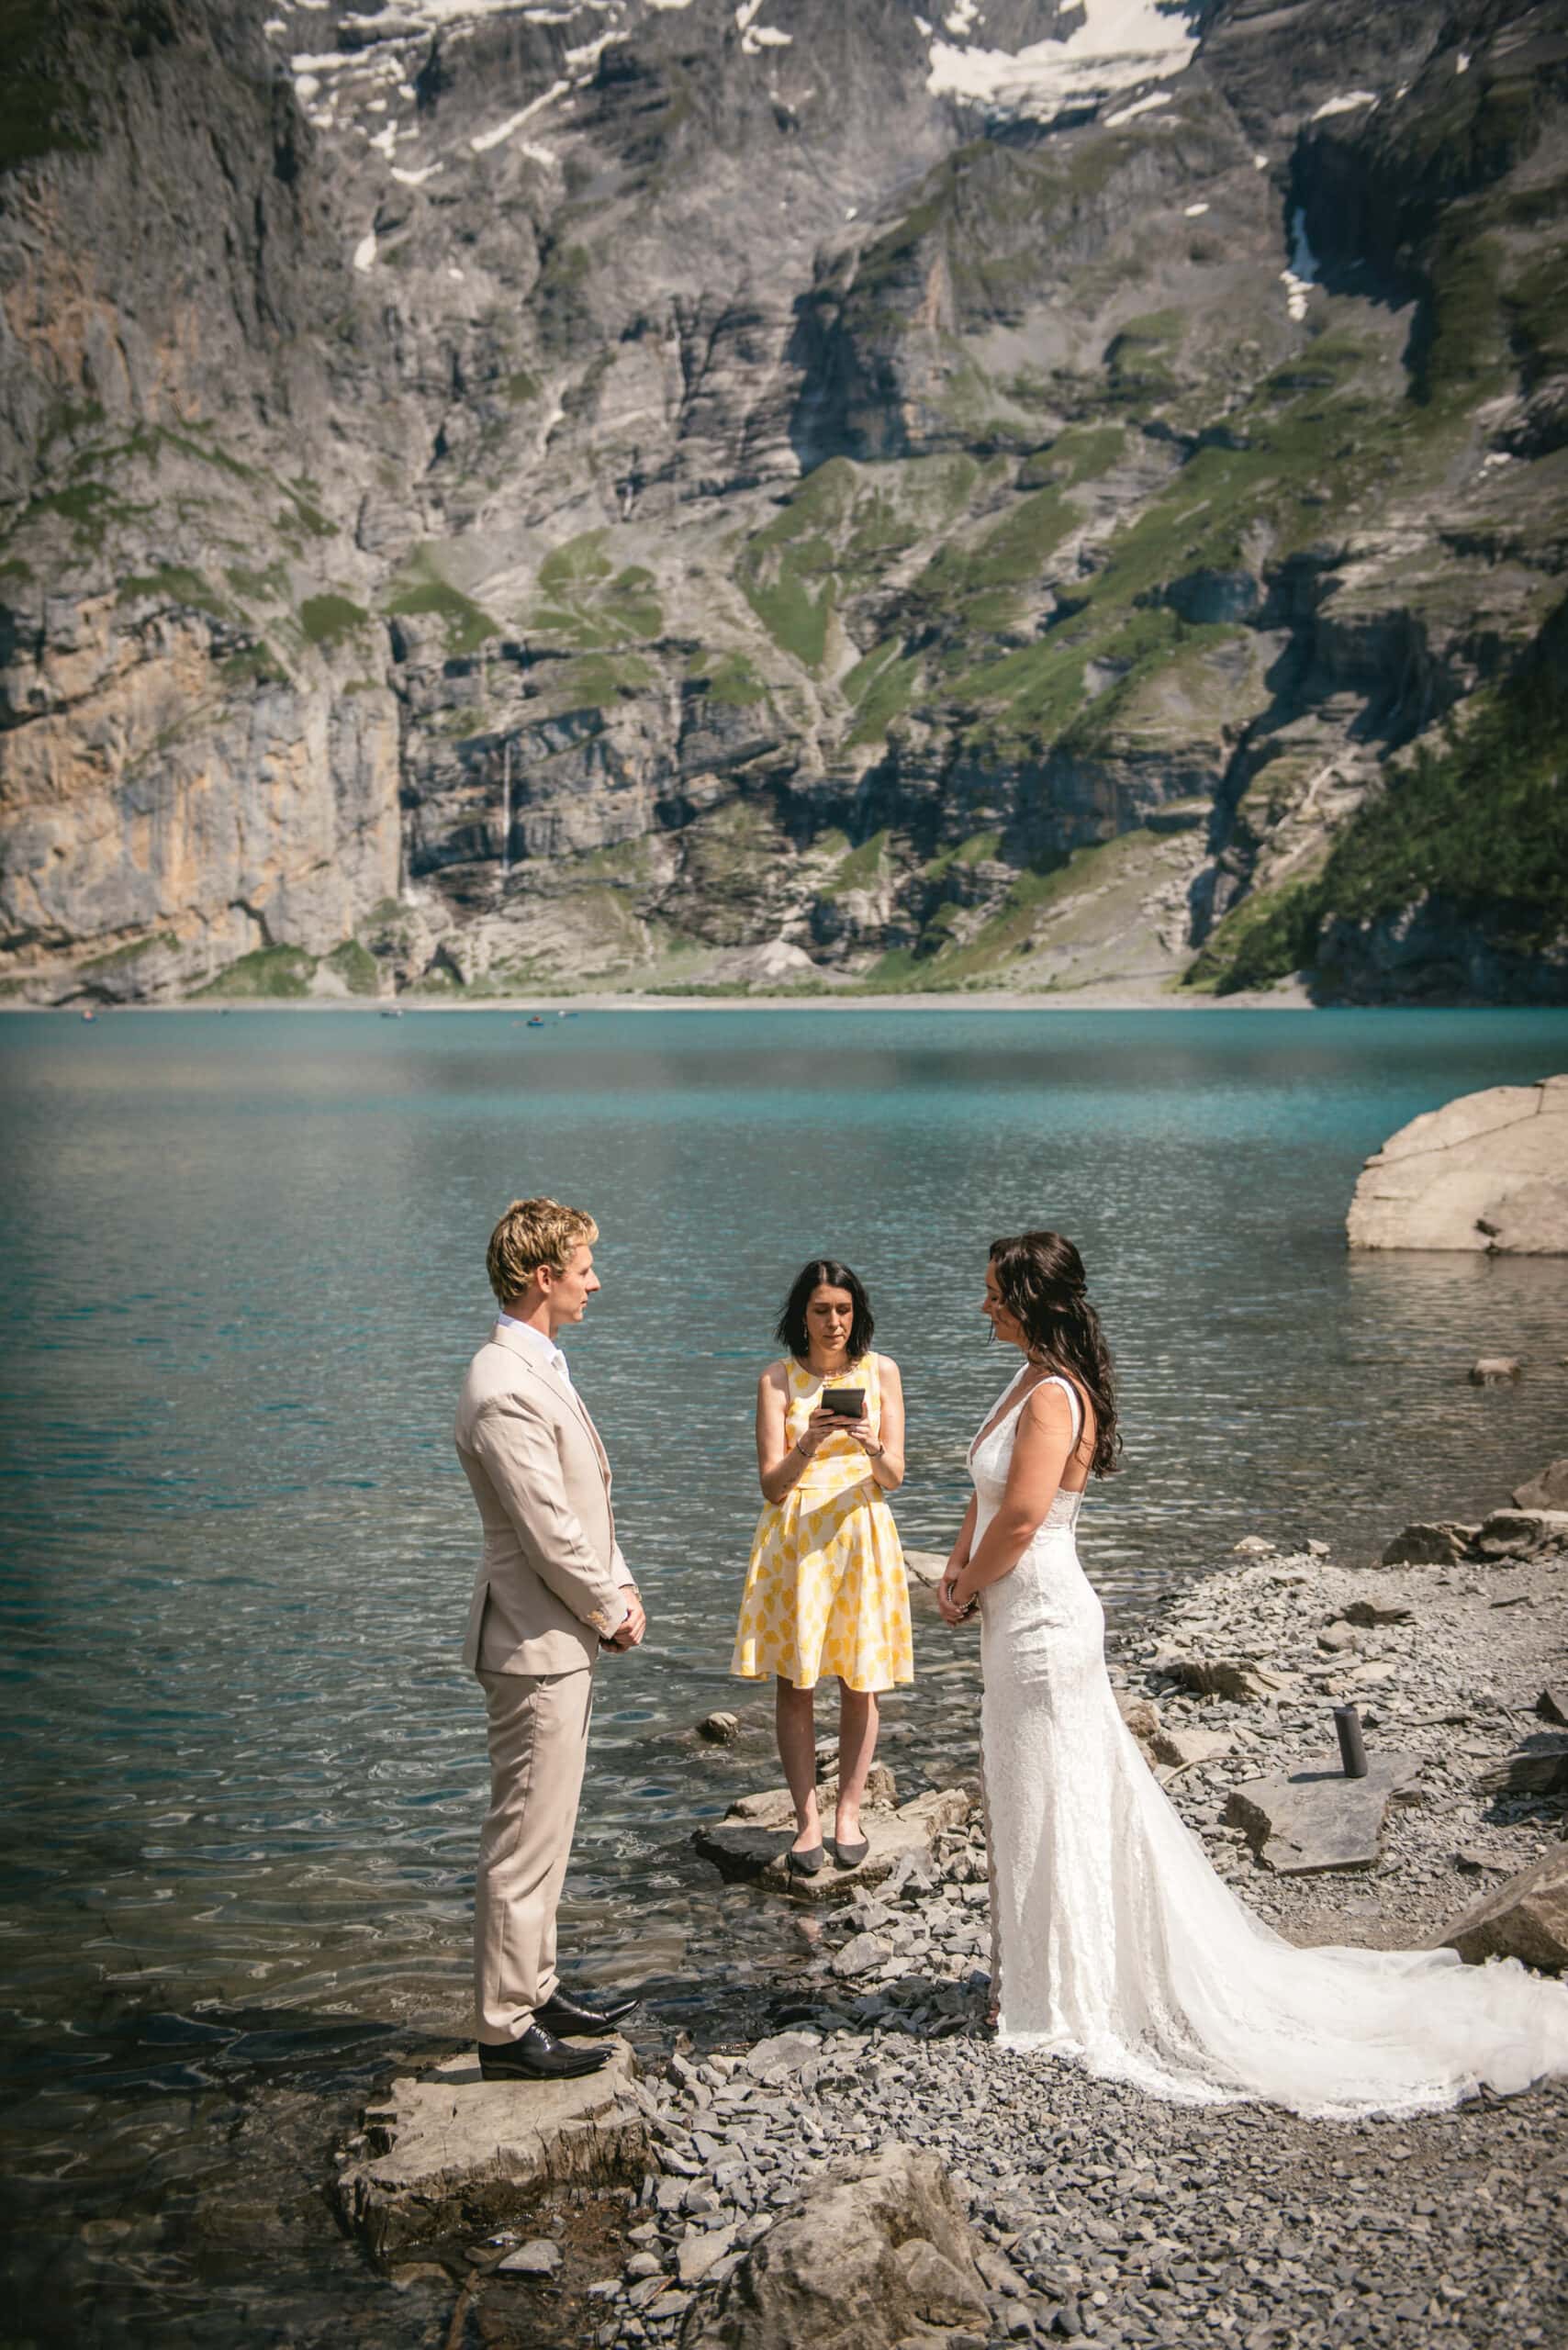 Trails of love, alpine vistas - Emily & Luke's hiking elopement.